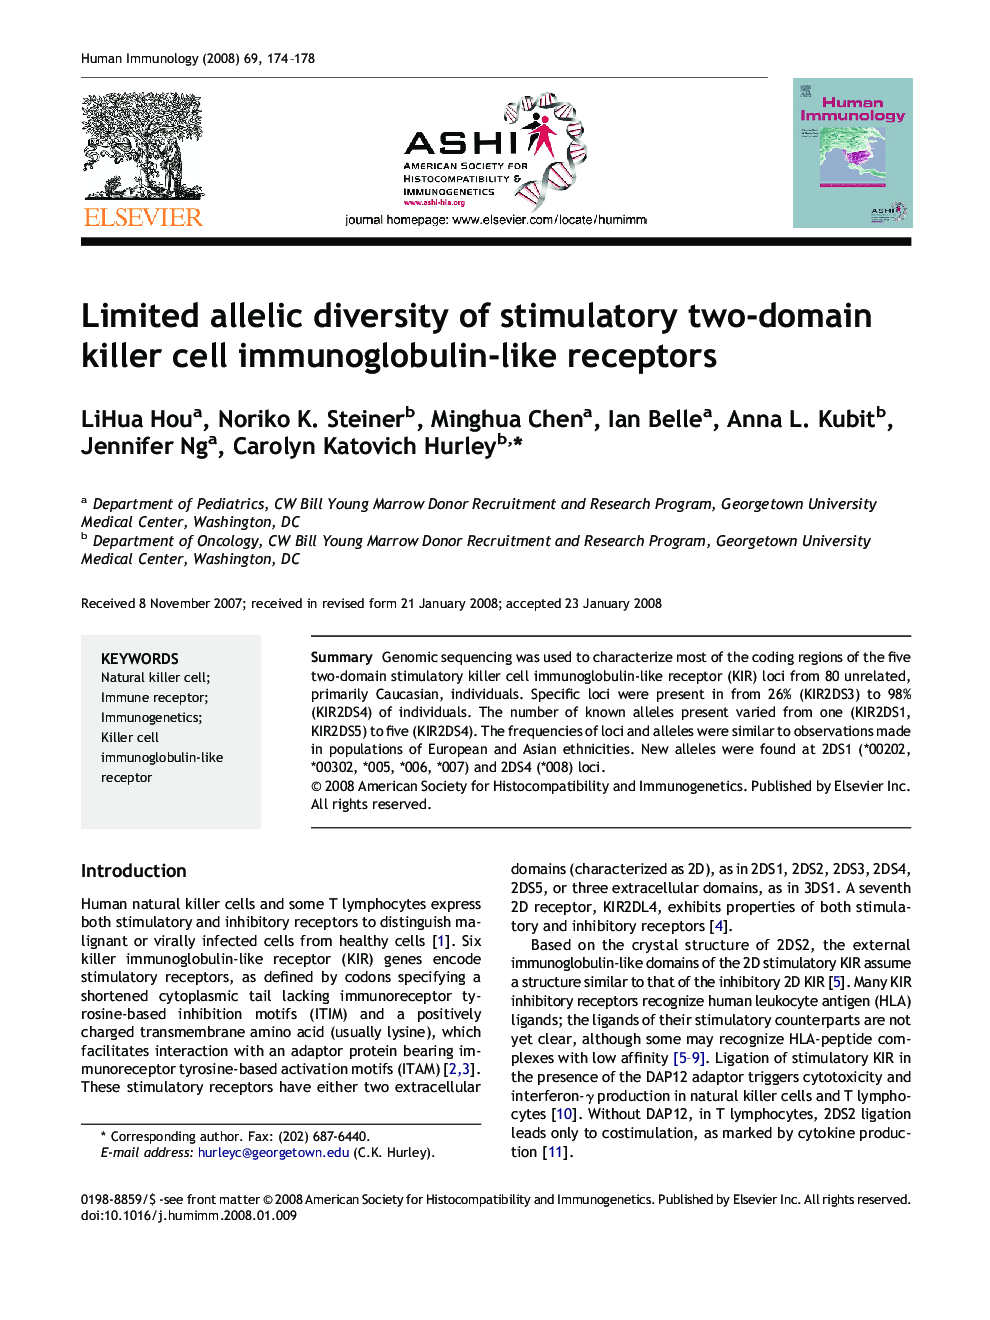 Limited allelic diversity of stimulatory two-domain killer cell immunoglobulin-like receptors